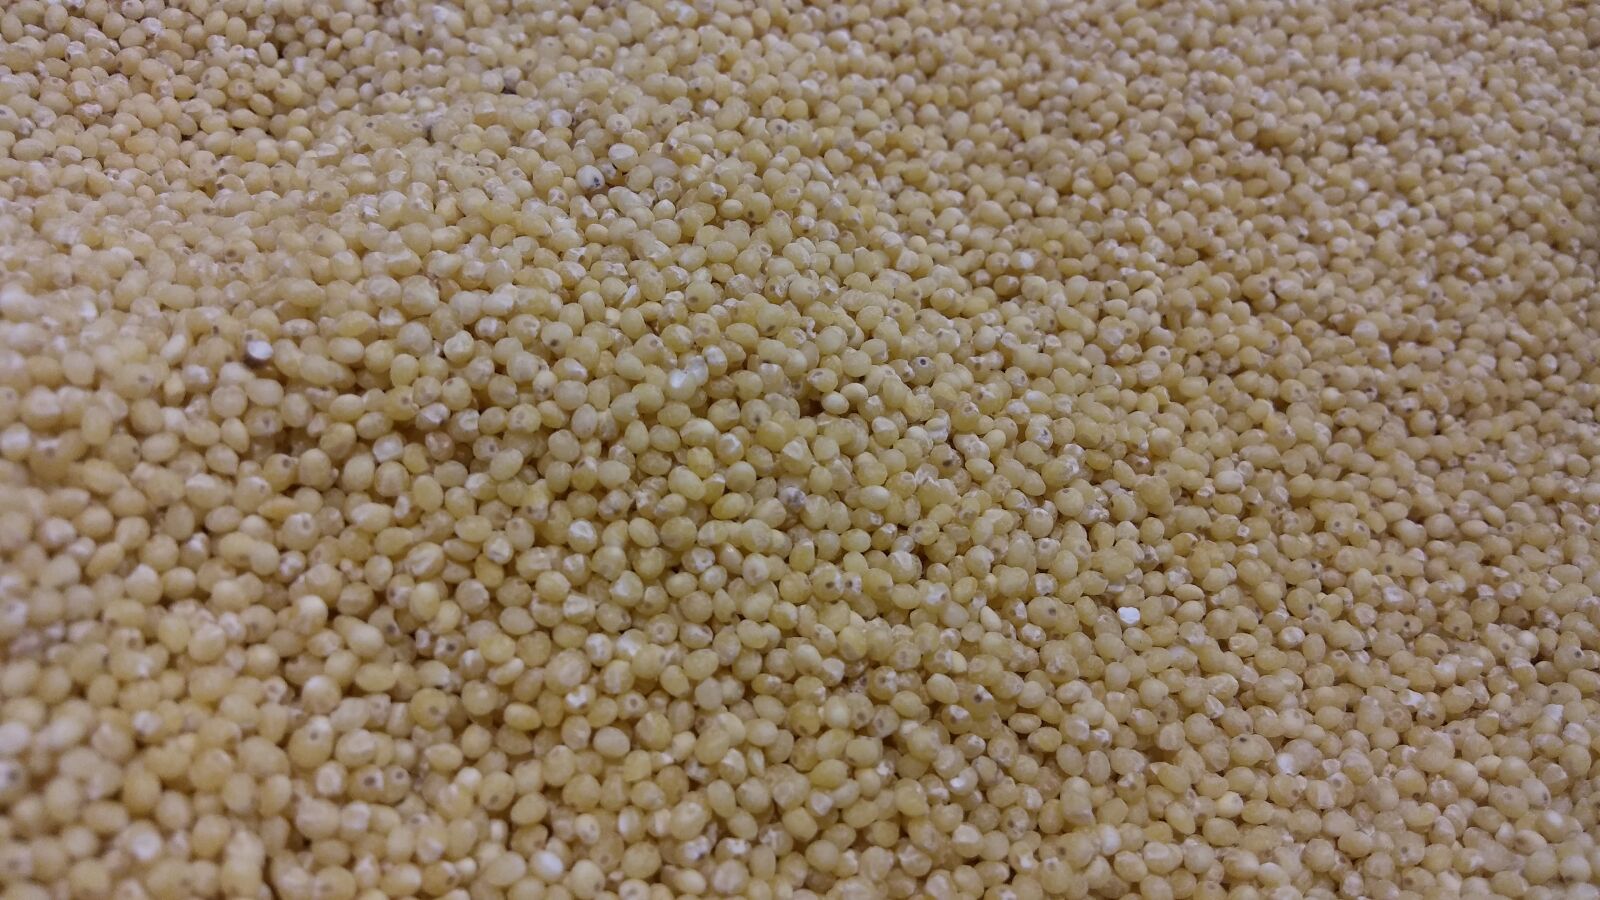 LG K10 sample photo. Millet, grain, cereal photography